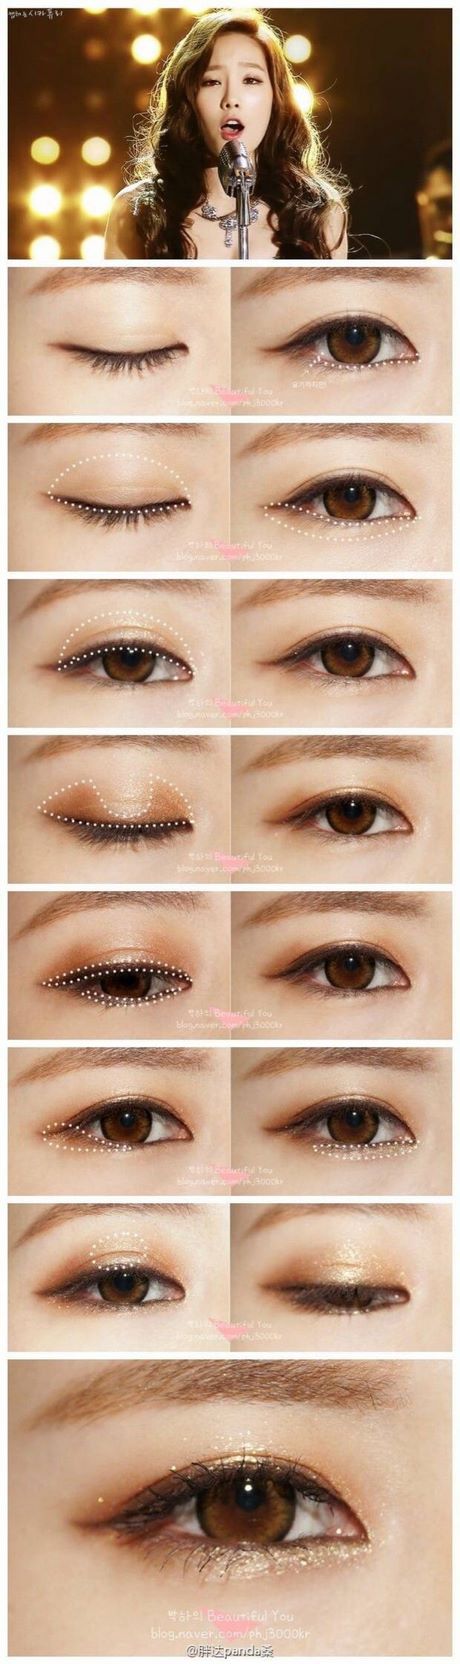 mori-makeup-tutorial-17_11 Mori make-up tutorial